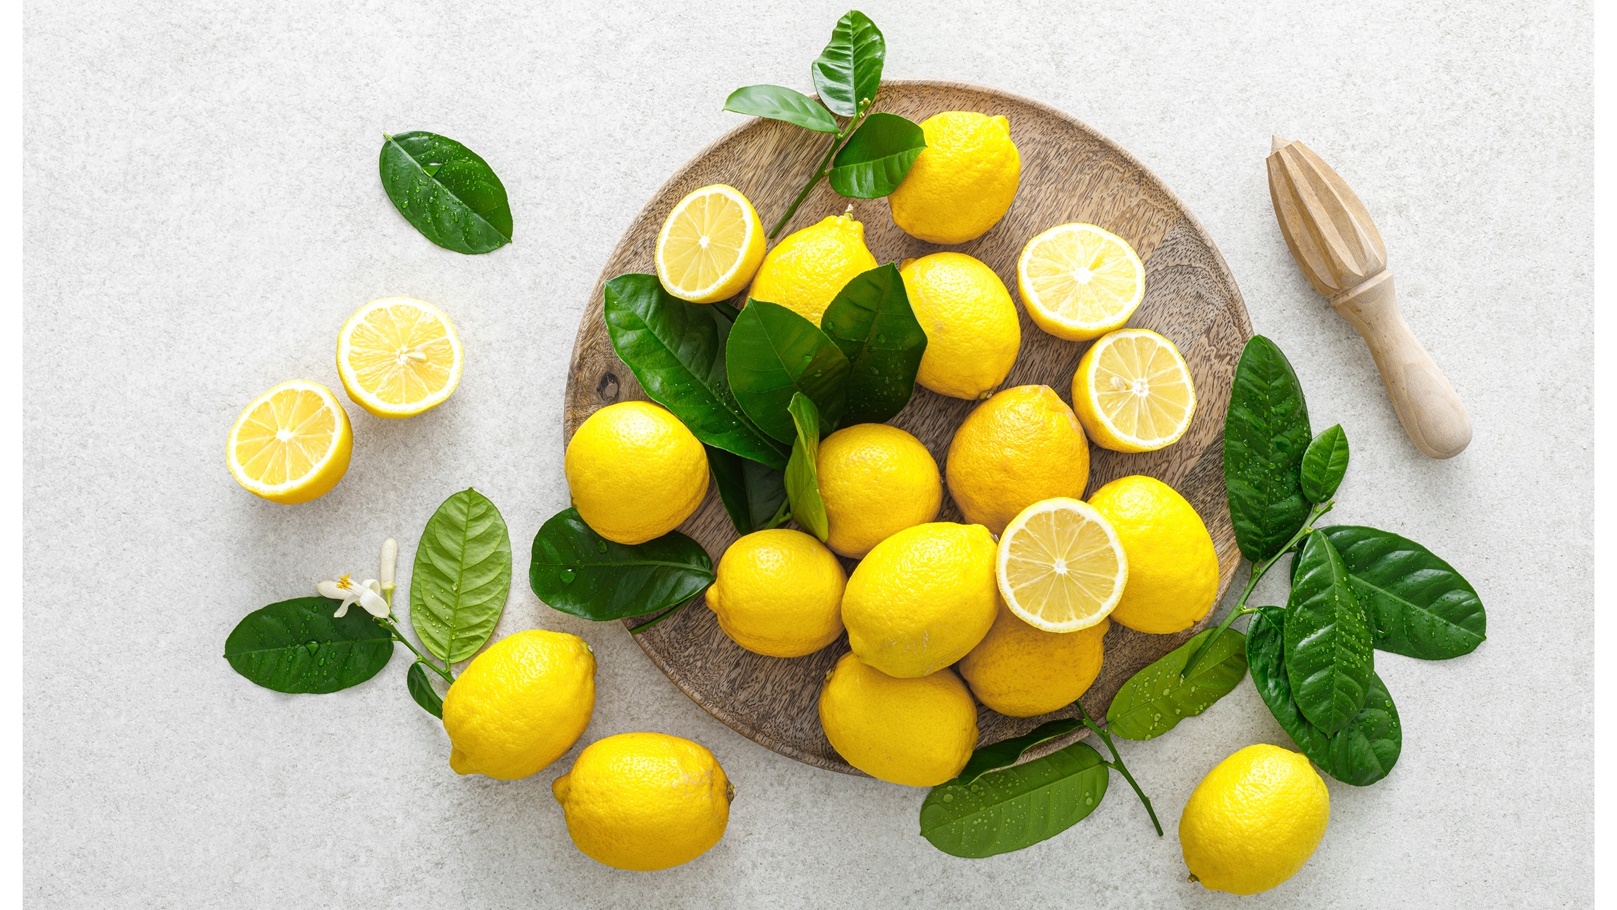 lemons-fresh-juicy-lemons-with-leaves-on-white-ba-2021-09-01-06-36-23-utc (2)